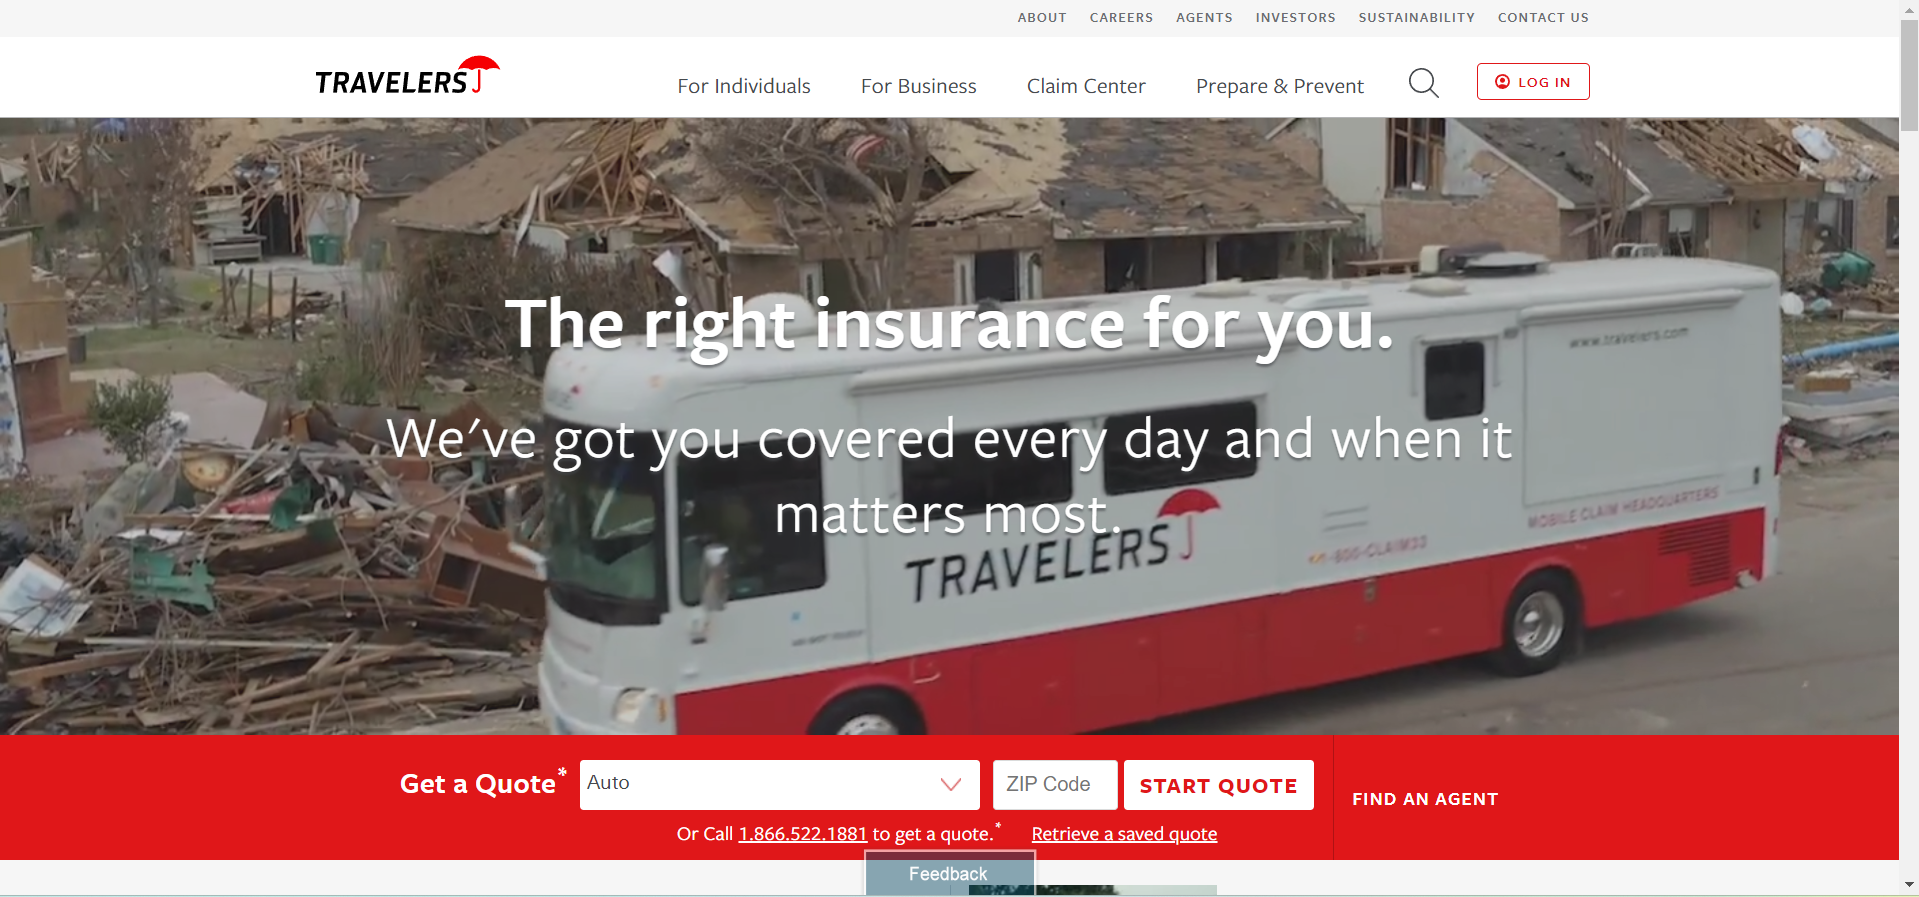 Travelers: Best Business Insurance for Web Development Agencies 